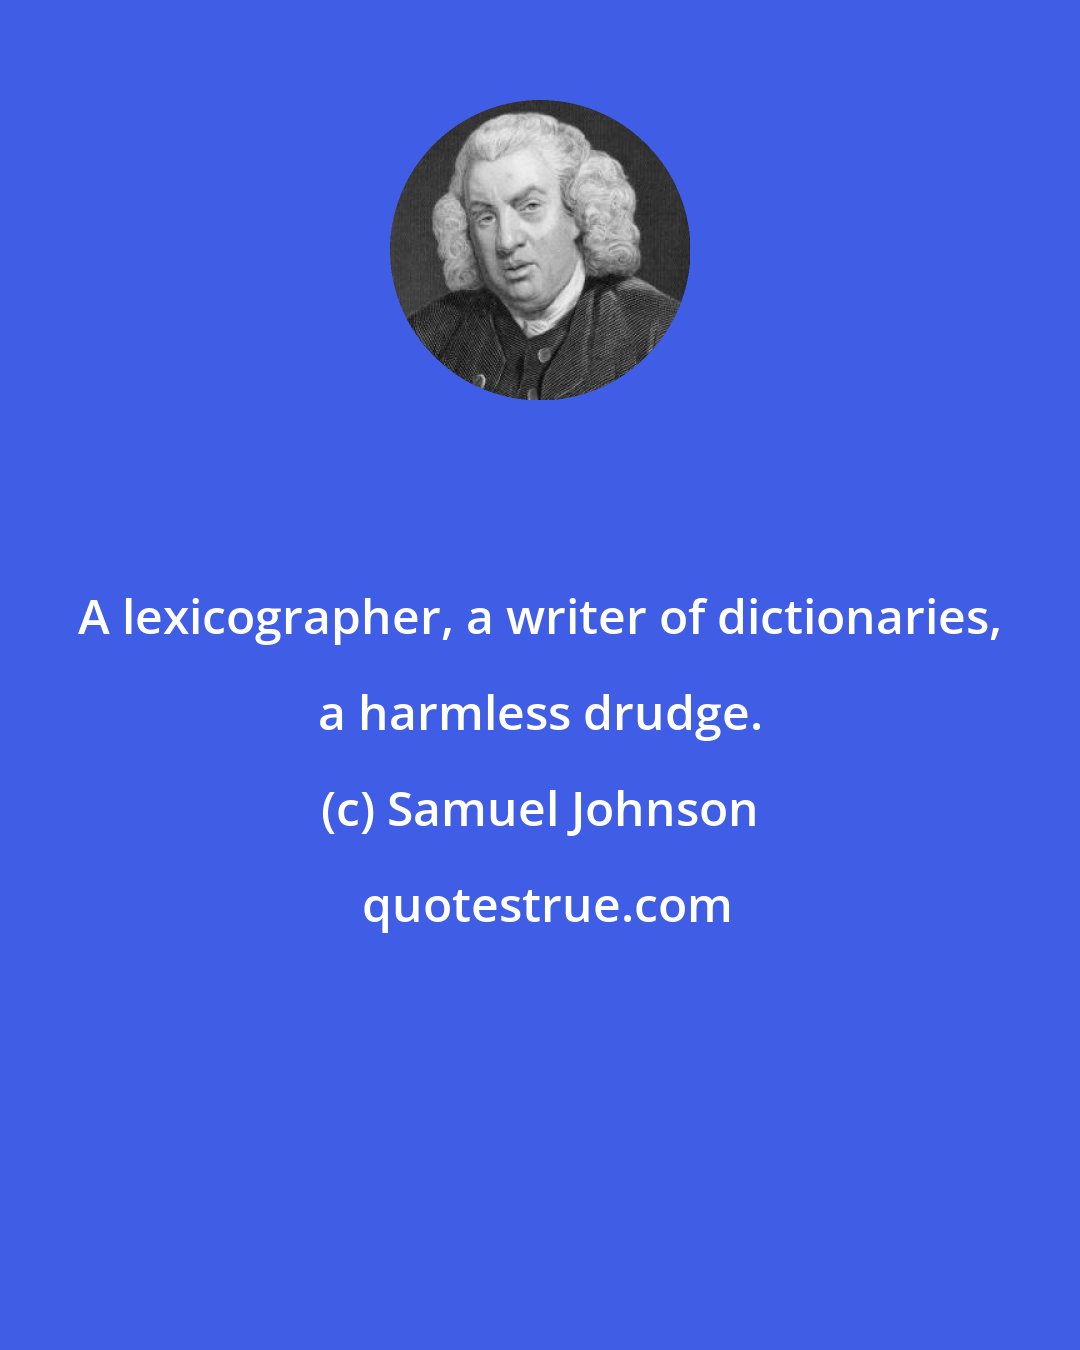 Samuel Johnson: A lexicographer, a writer of dictionaries, a harmless drudge.